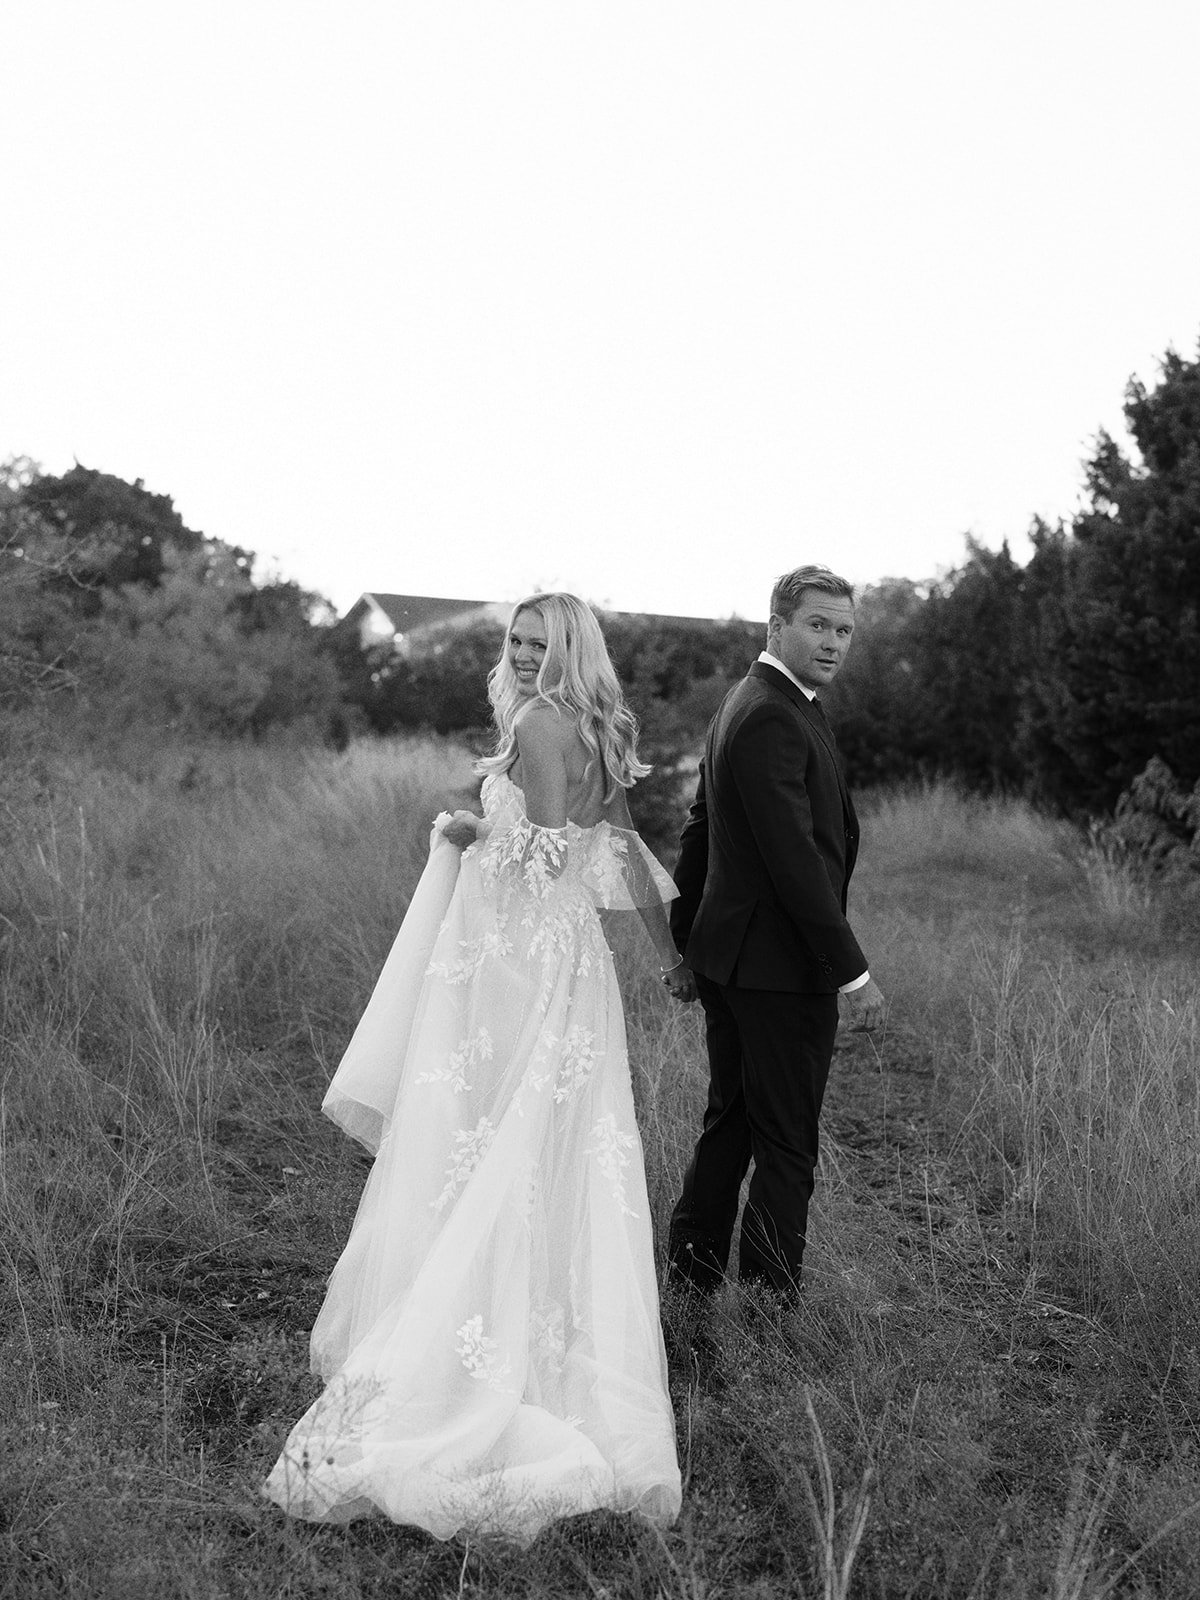 Best-Austin-Wedding-Photographers-Elopement-Film-35mm-Asheville-Santa-Barbara-Backyard-108.jpg